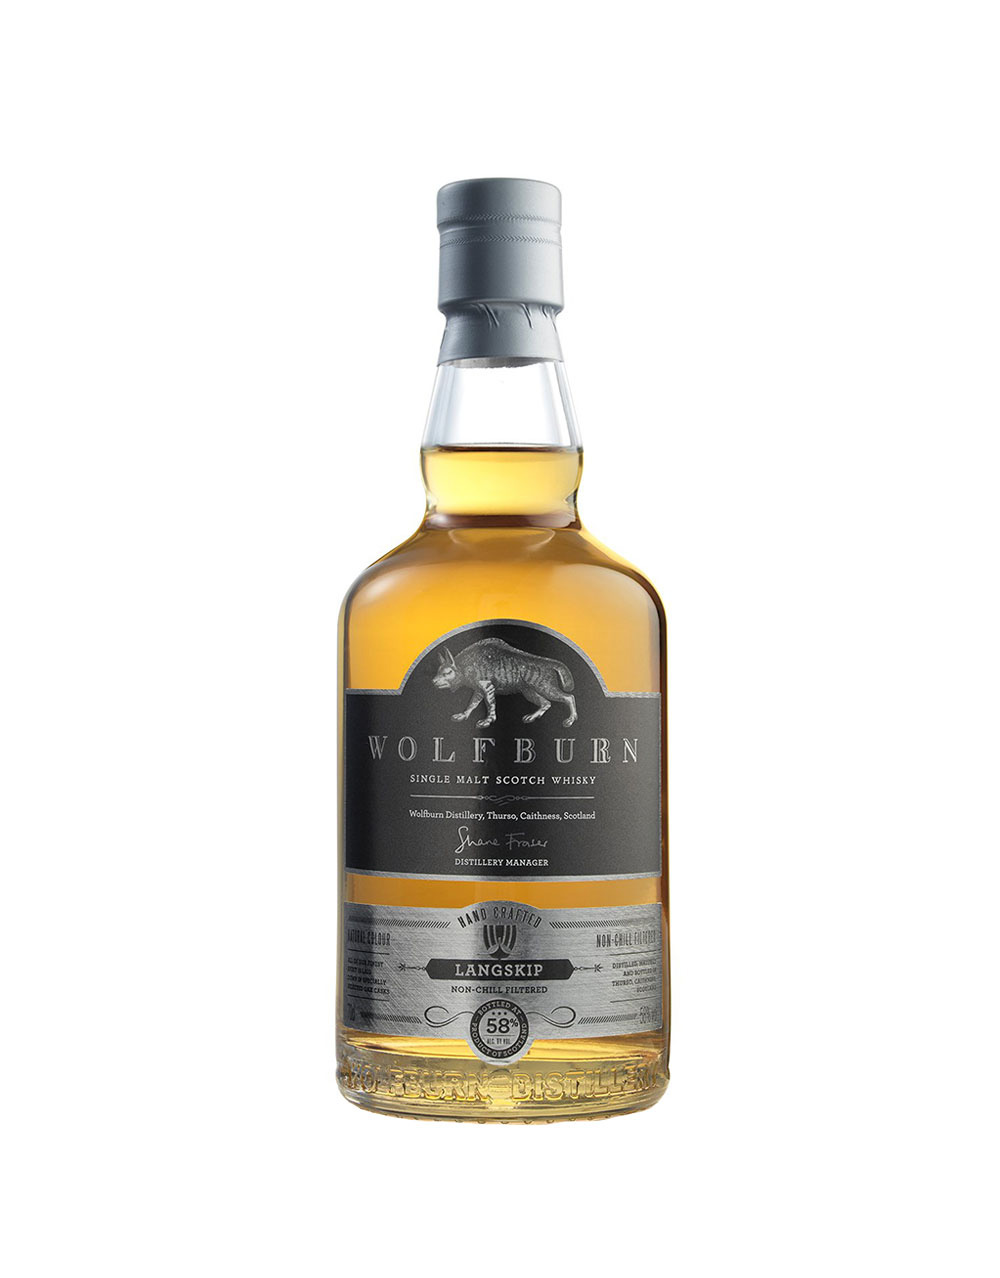 Glendalough Double Barrel Irish Whiskey